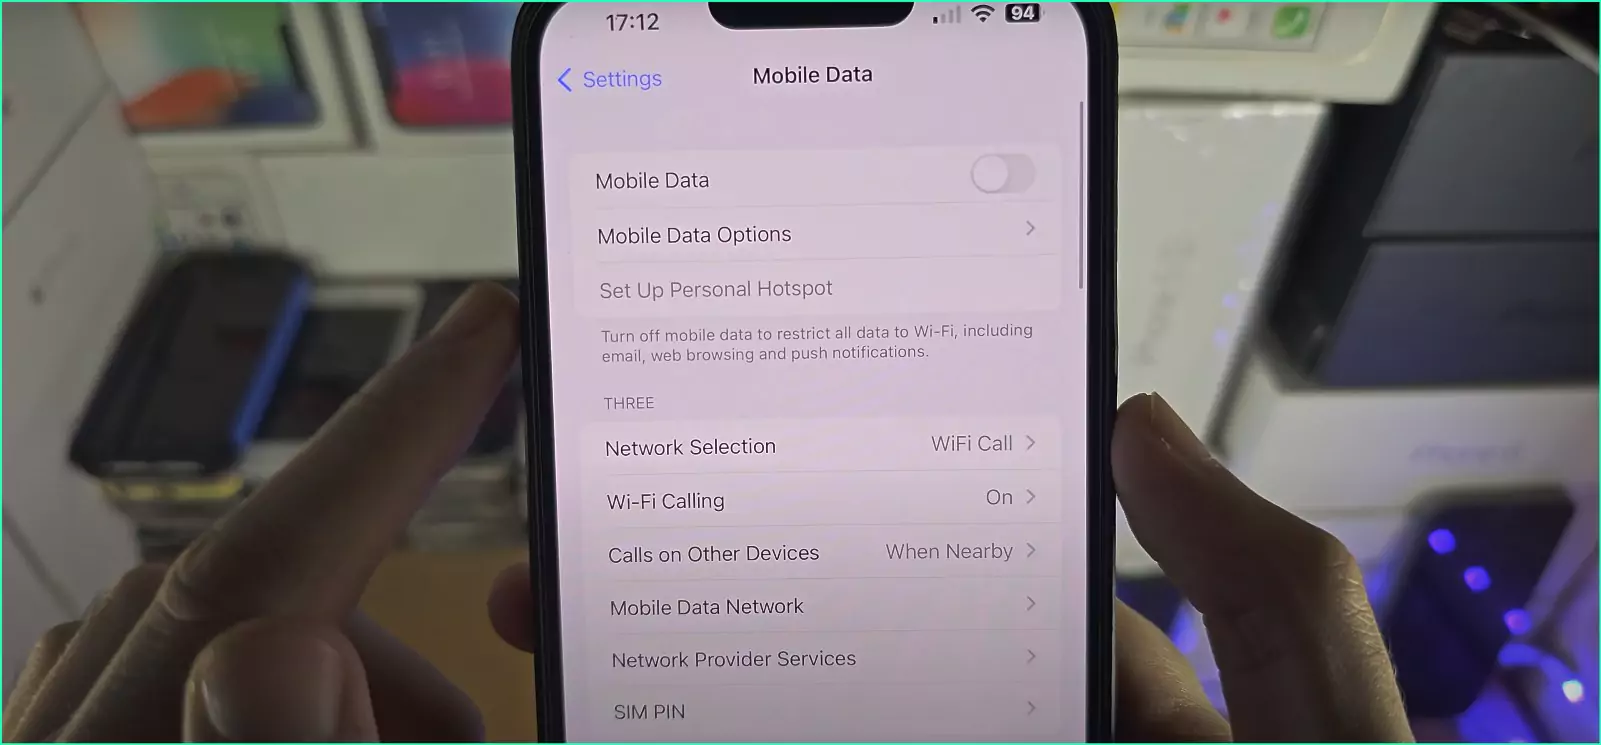 mobile data settings menu from iphone image